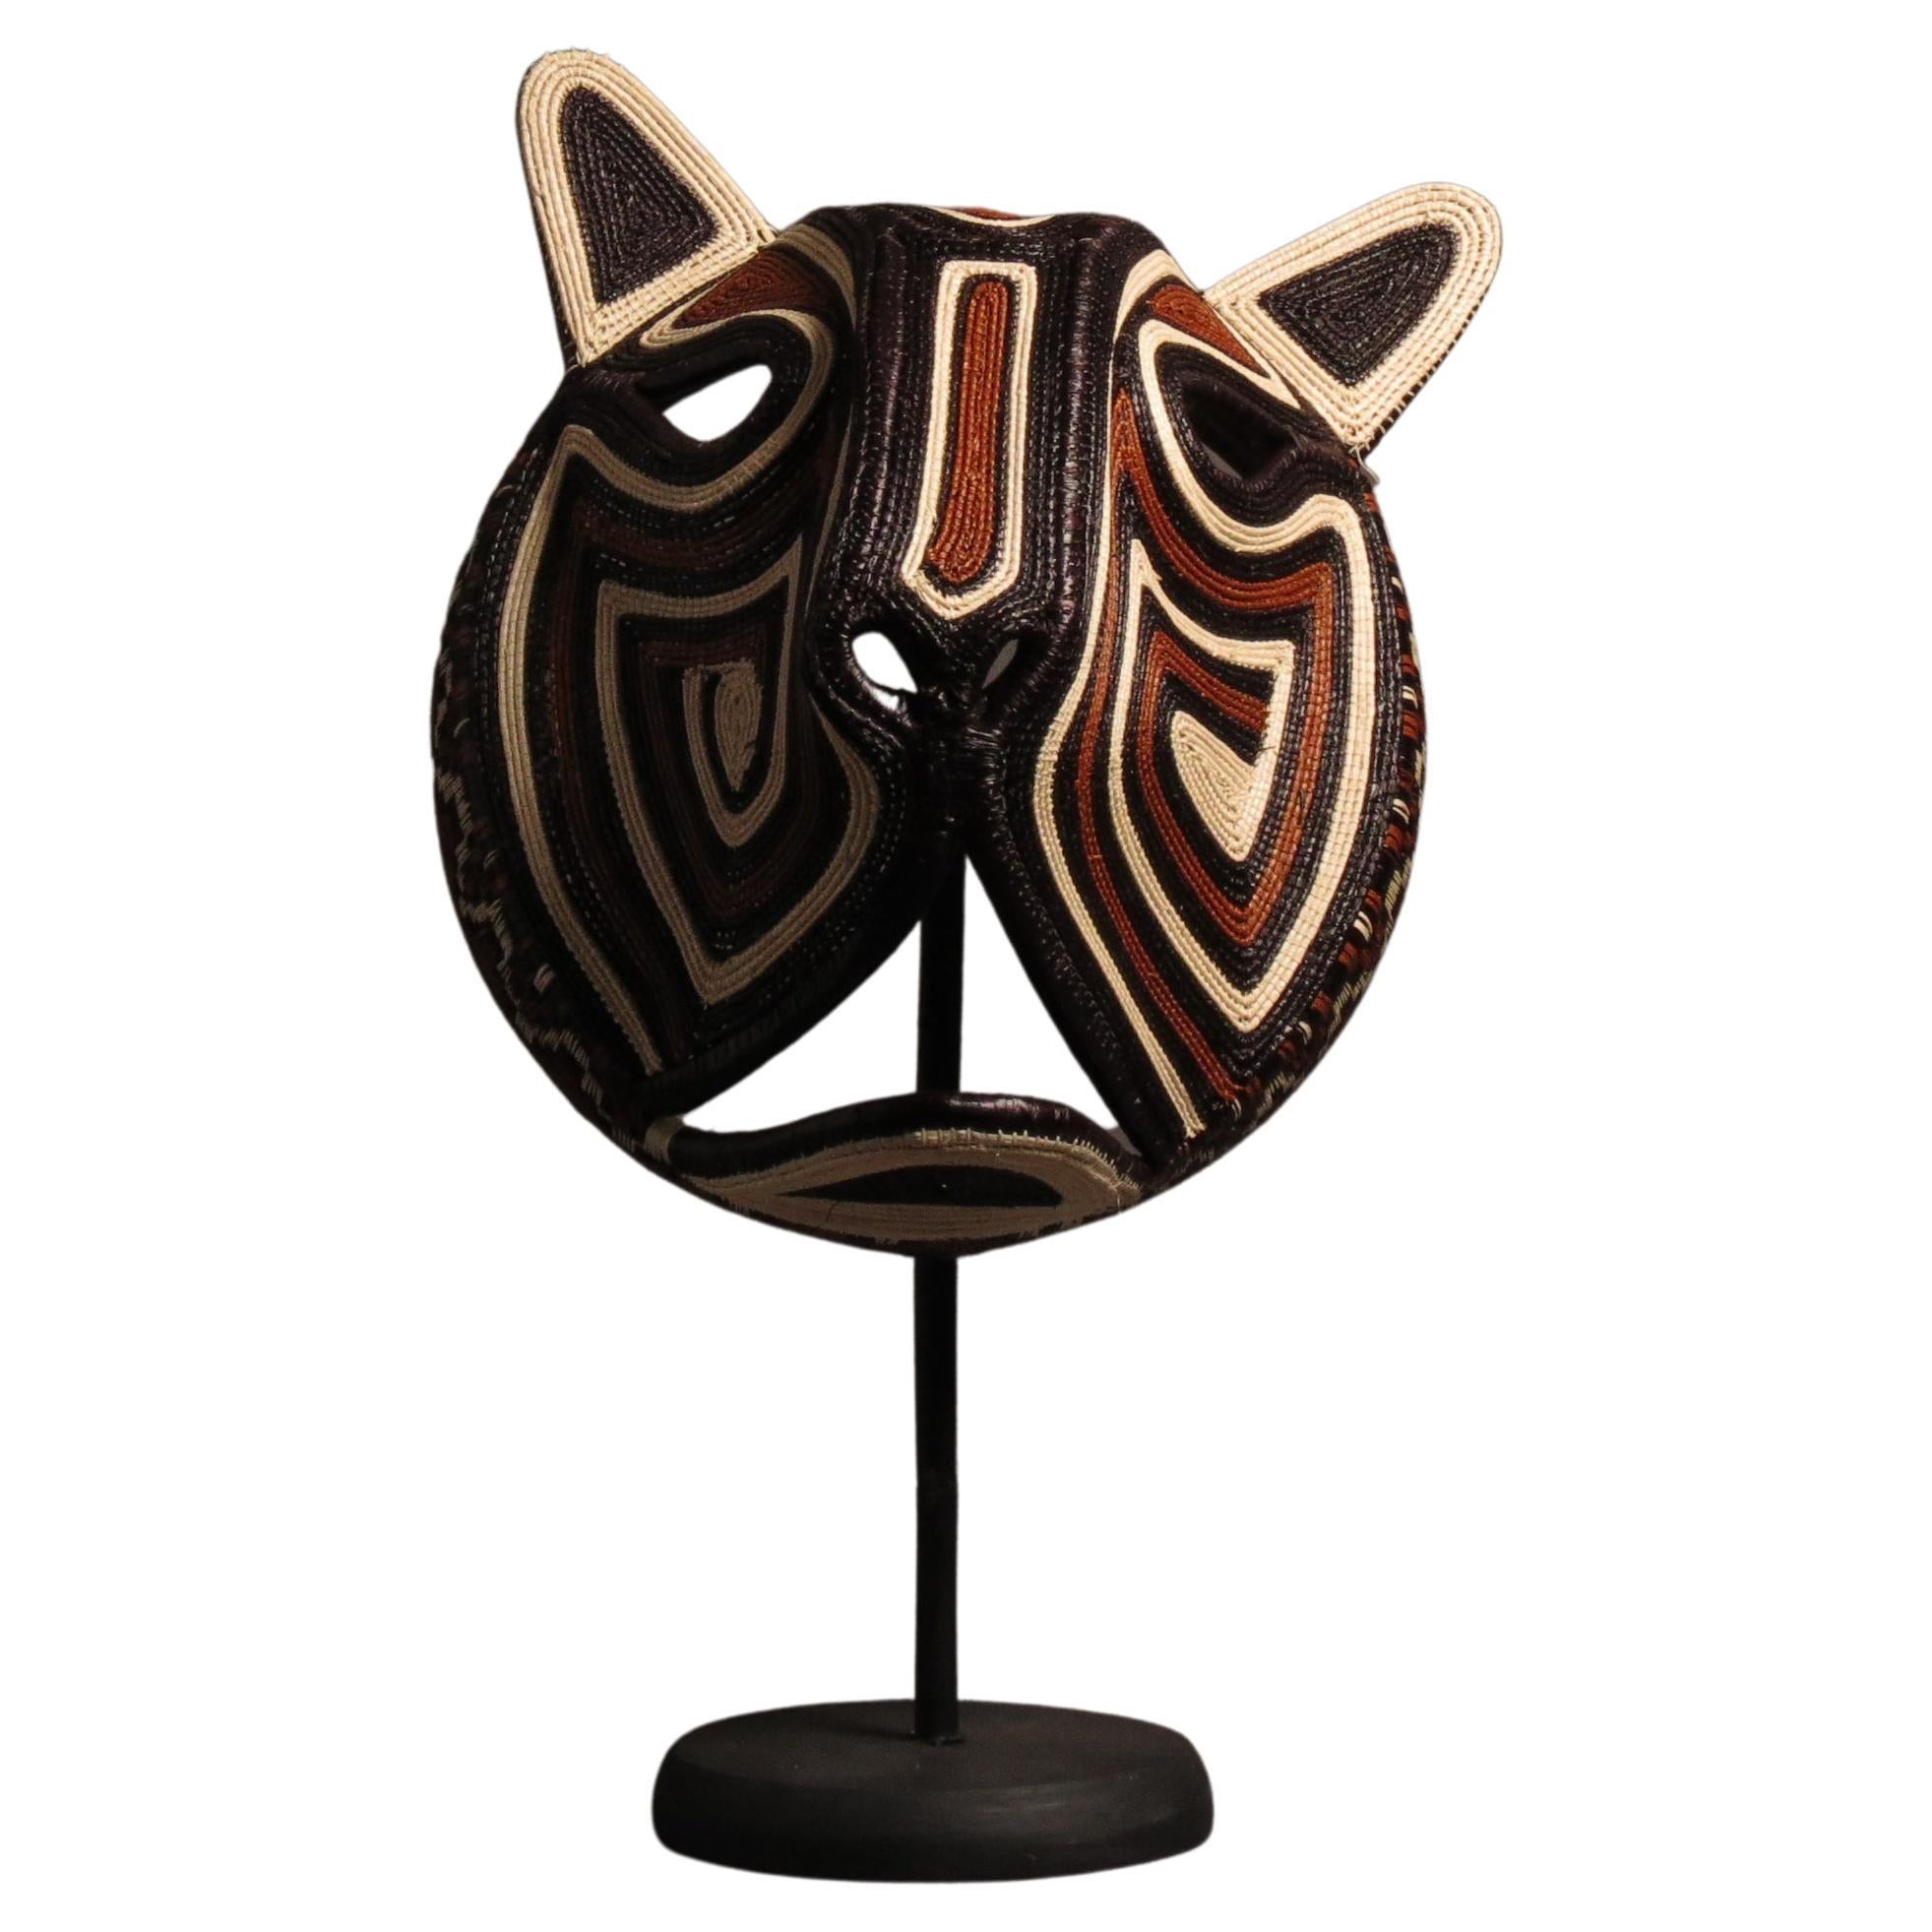 Shamanic Mask from the Rainforest Bagadó